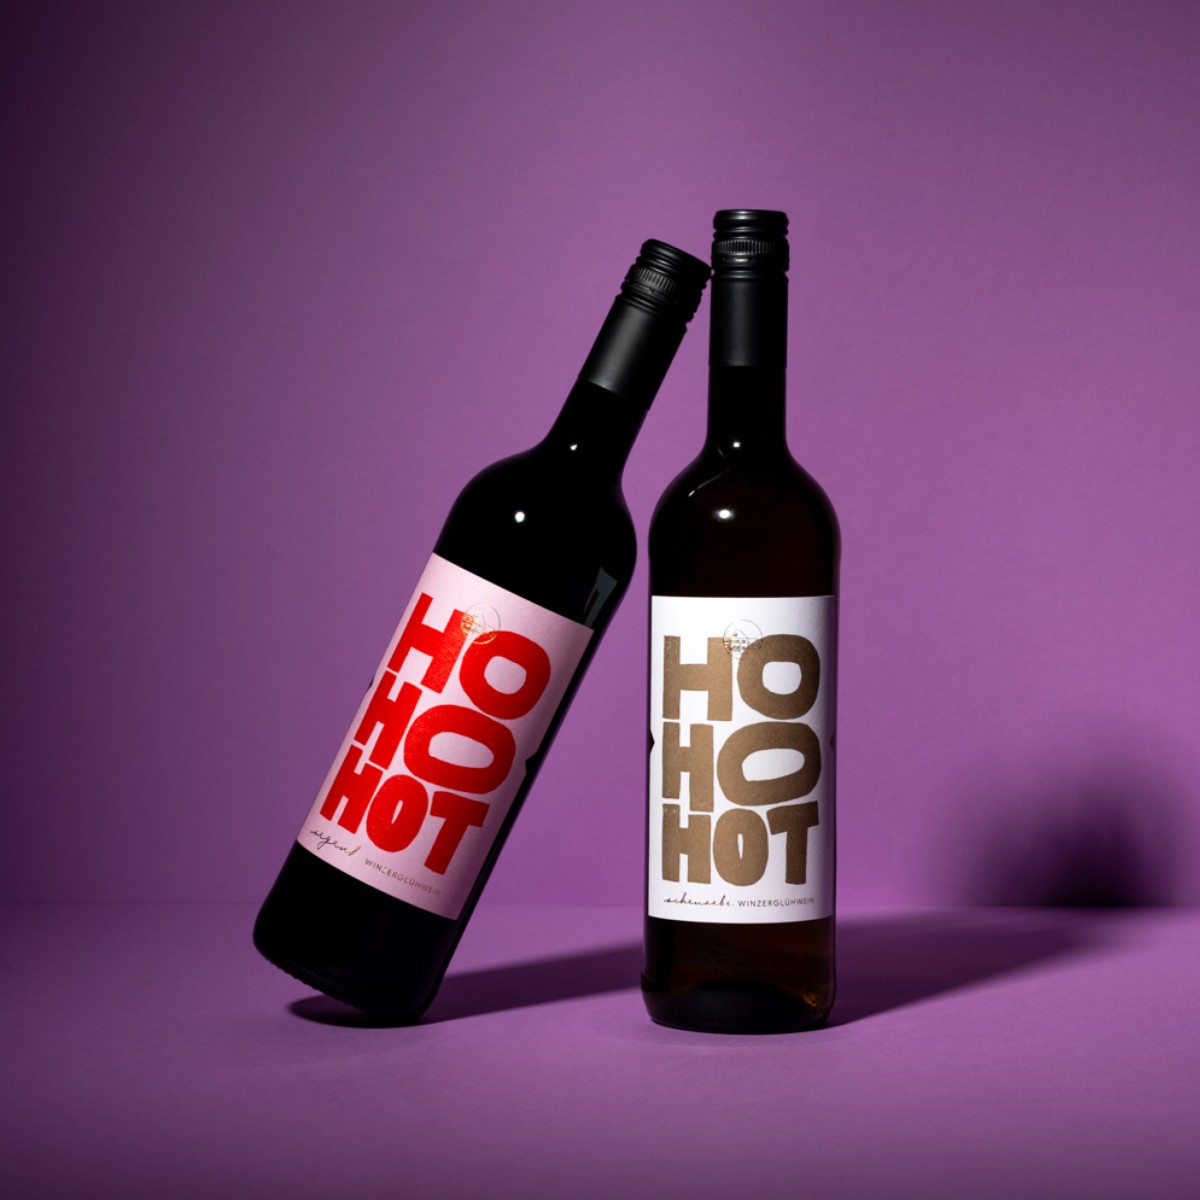 HO HO HOT – gemischtes Glühweinpaket (rot & weiß) vom Weingut Krughof - 6er-/12er Paket